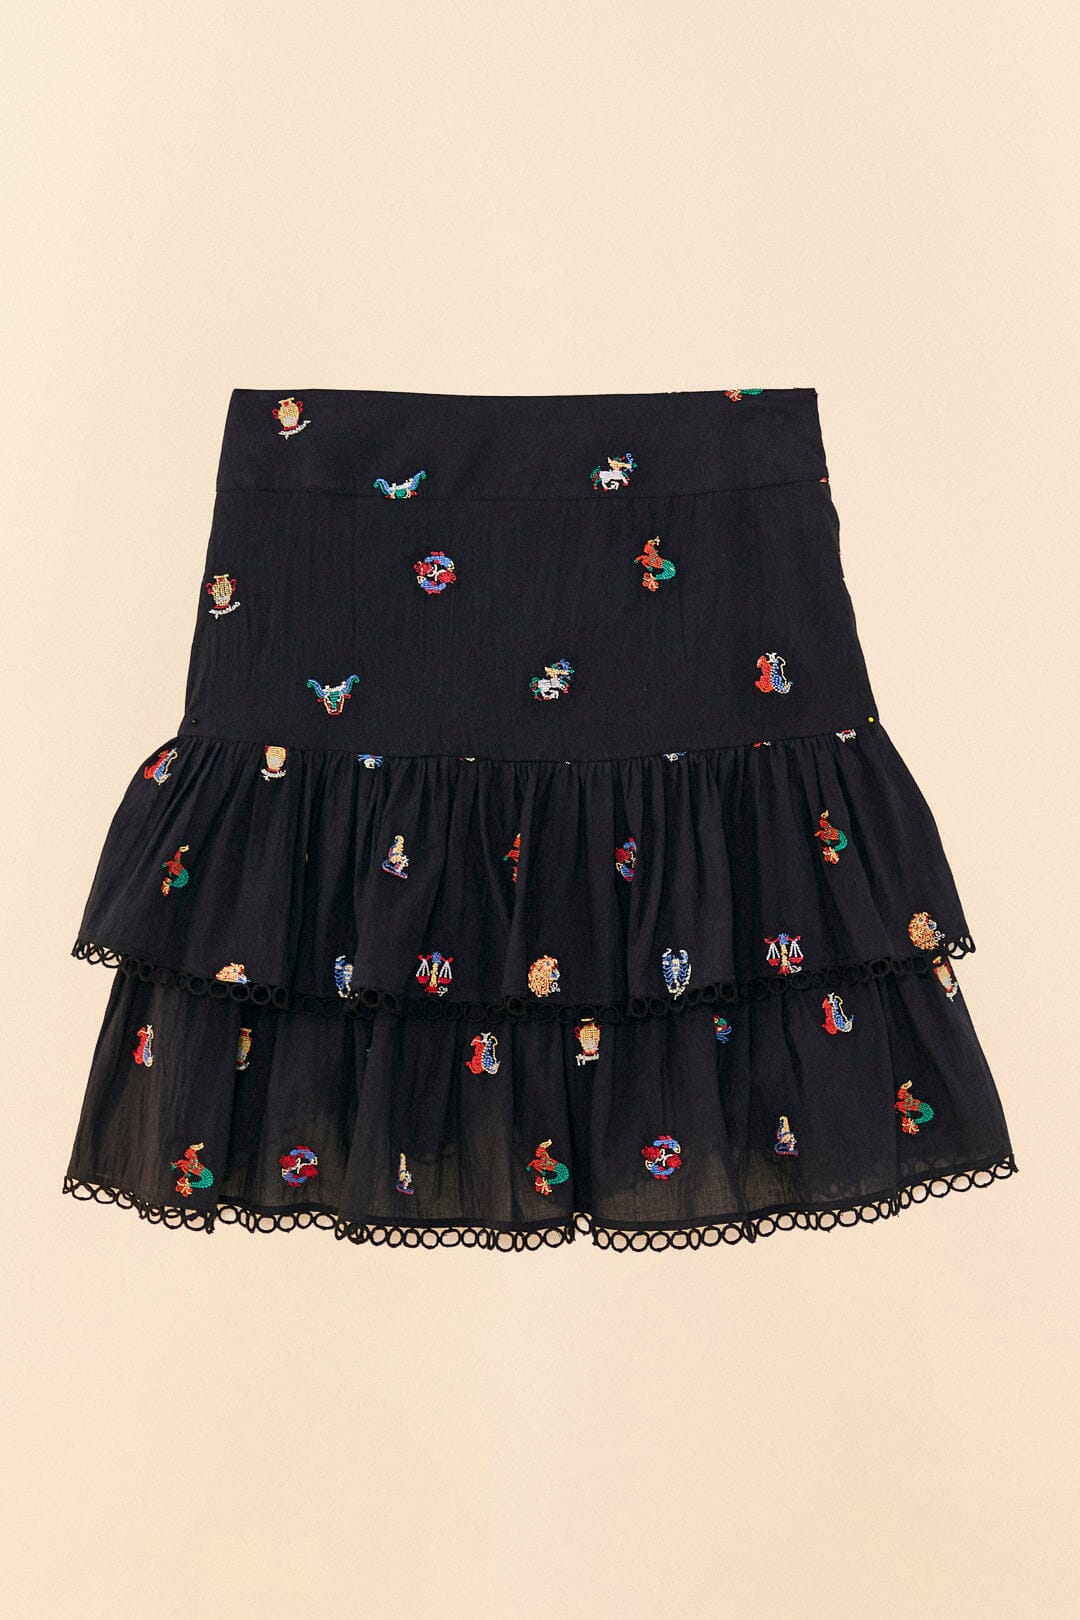 Zodiac Cross Stitch Mini Skirt